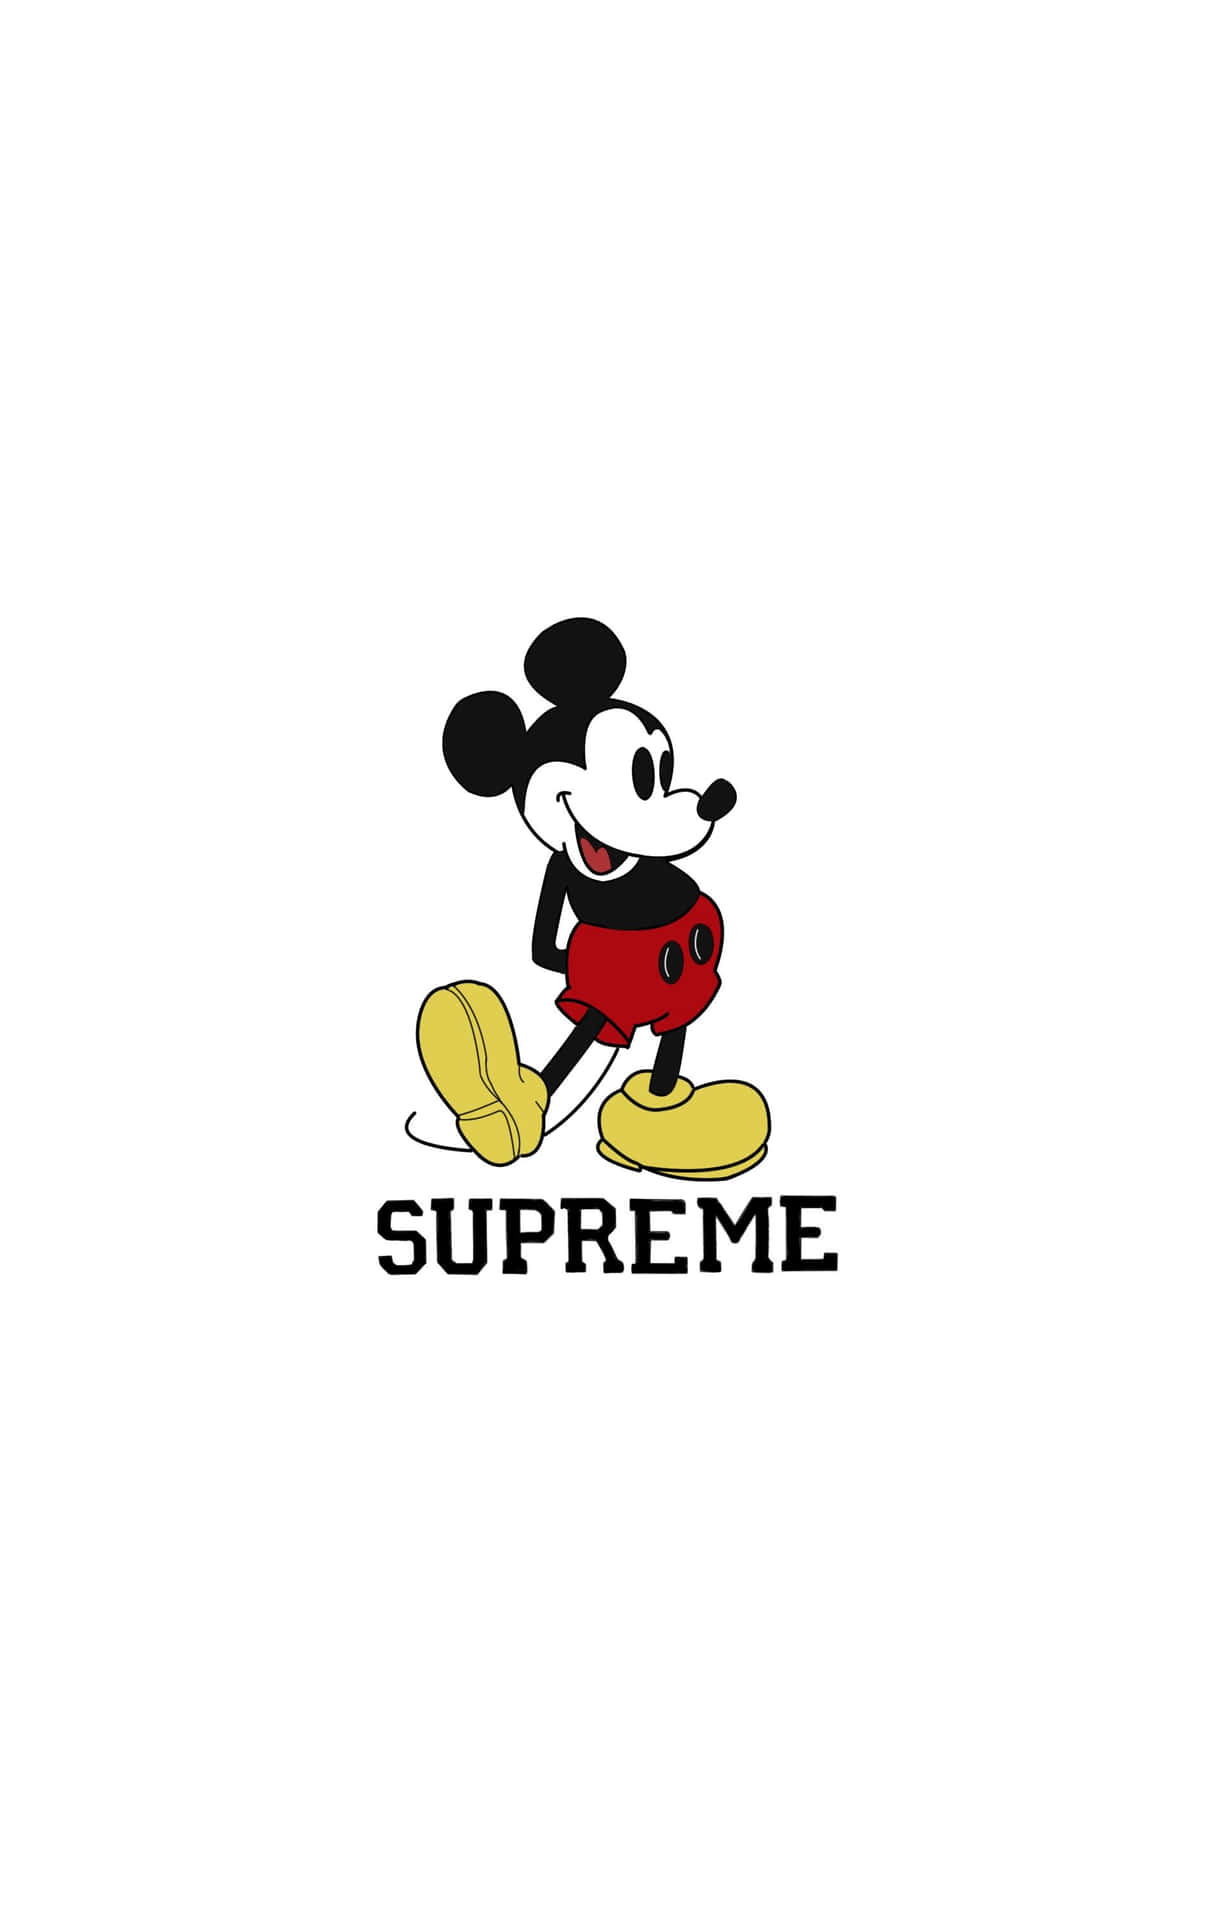 Supreme Mickey Mouse Logo Wallpaper